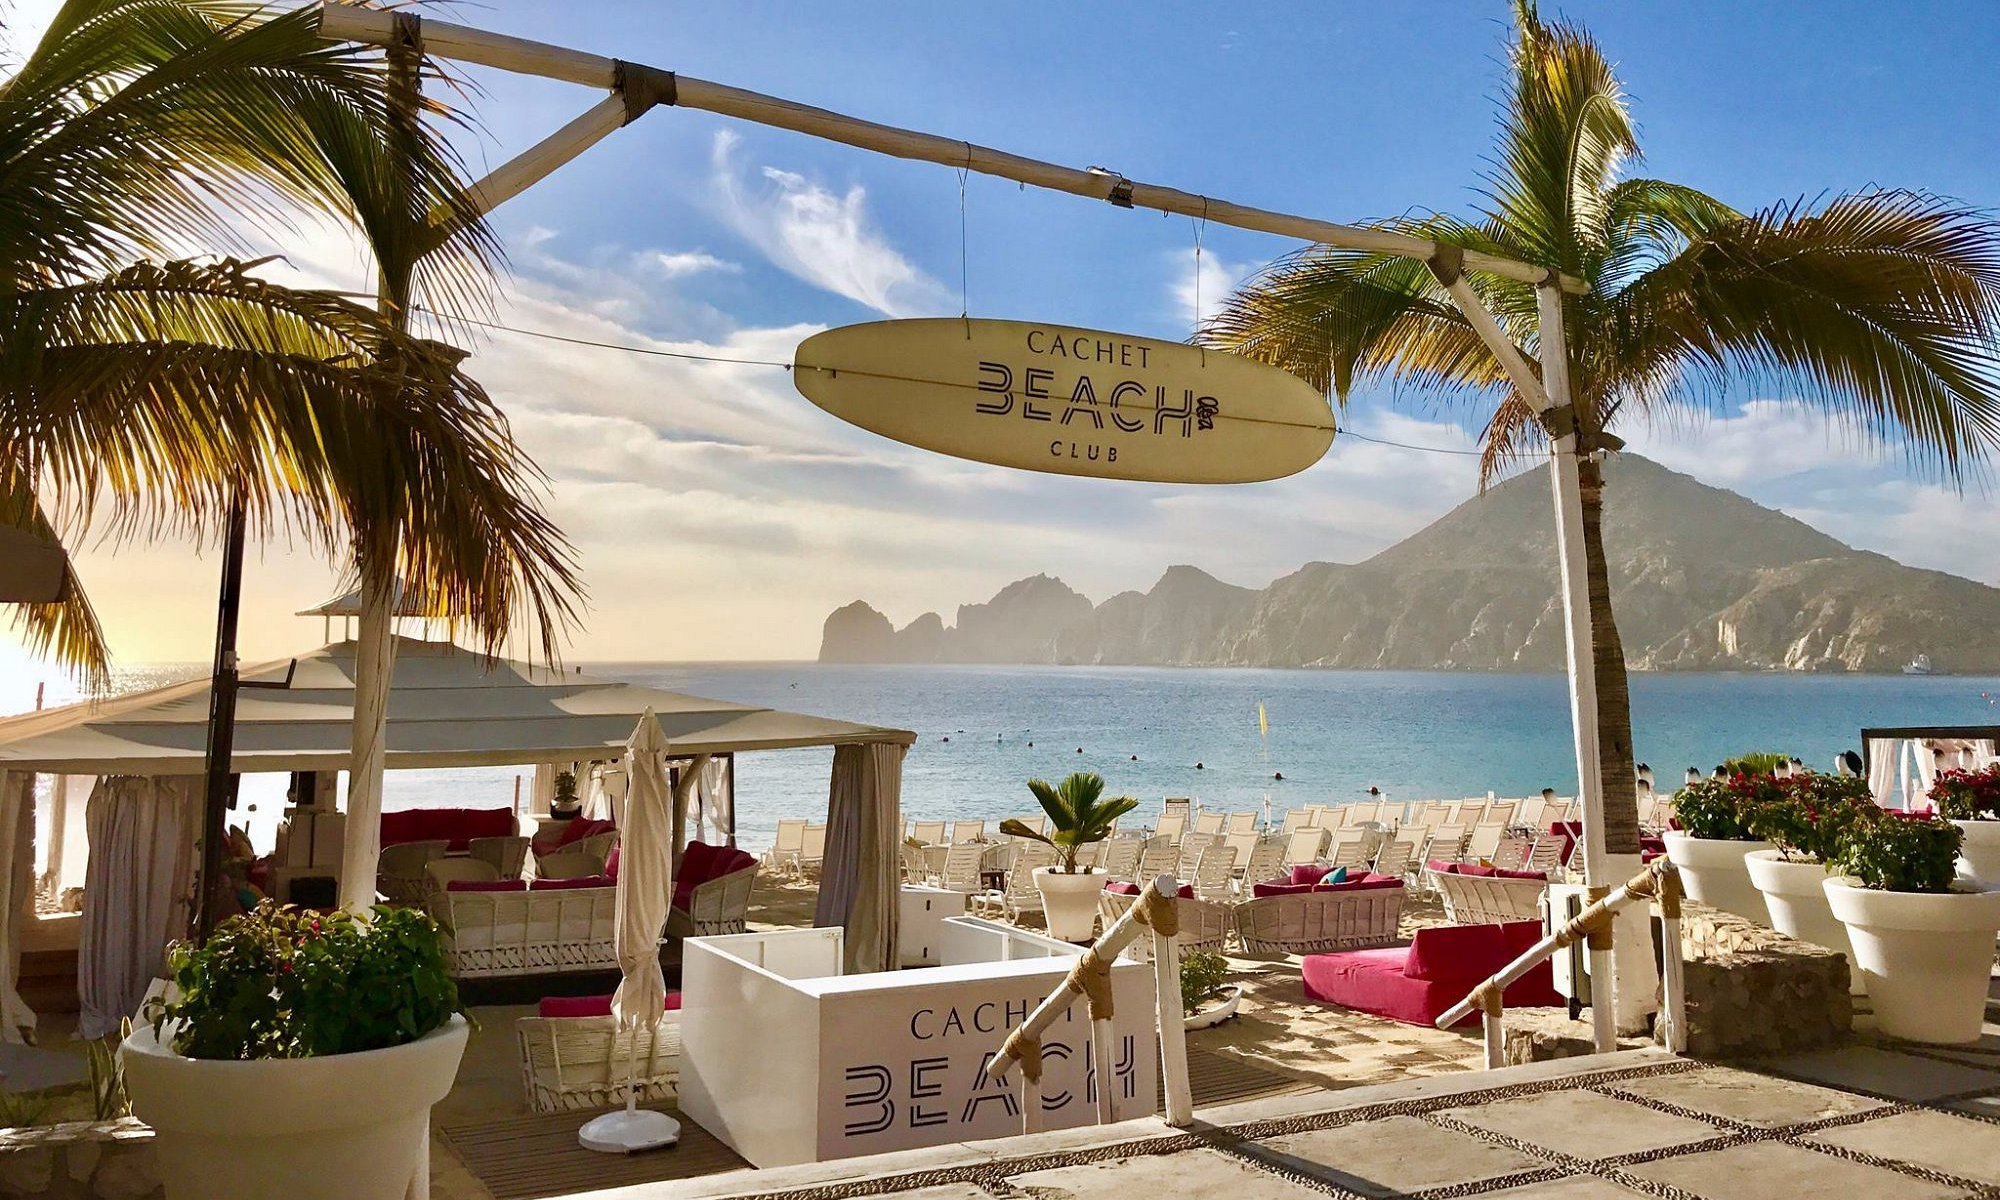 CORAZON BEACH CLUB, Cabo San Lucas - Menu, Prices & Restaurant Reviews -  Tripadvisor